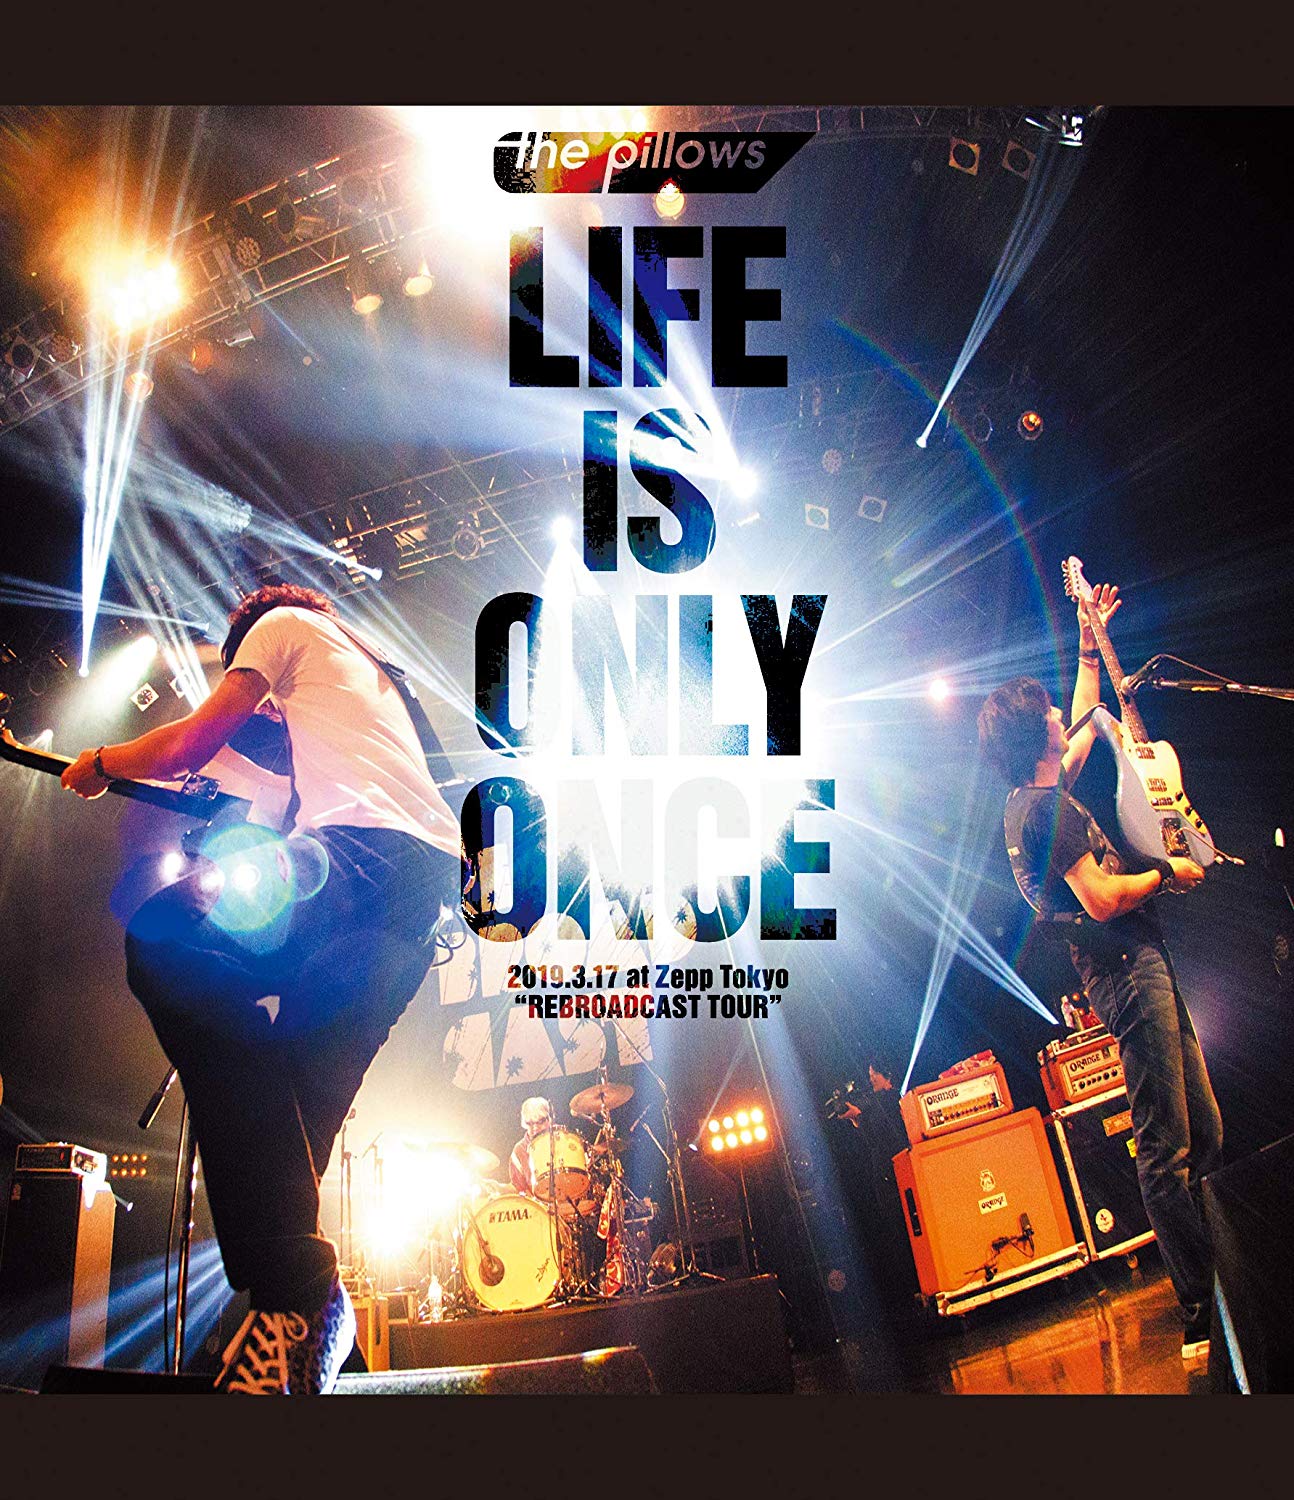 Music Blu-Ray Pillows (The) - Life Is Only Once 2019.3.17 At Zepp Tokyo 'Rebroadcast Tour' NUOVO SIGILLATO, EDIZIONE DEL 04/09/2019 SUBITO DISPONIBILE